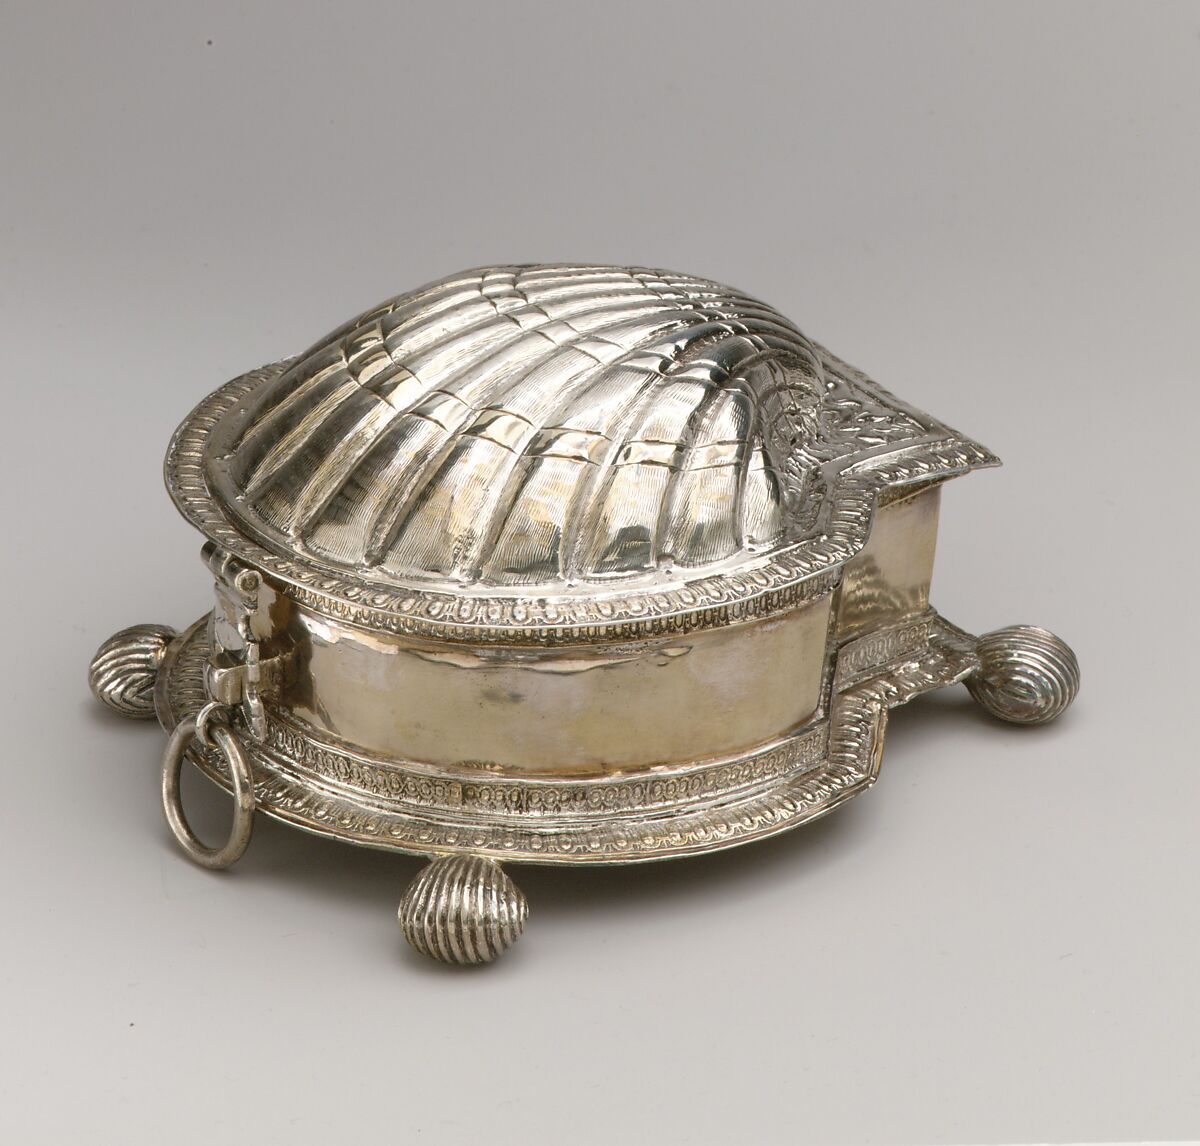 Spice box, W. R., London (ca. 1602), Silver, British, London 